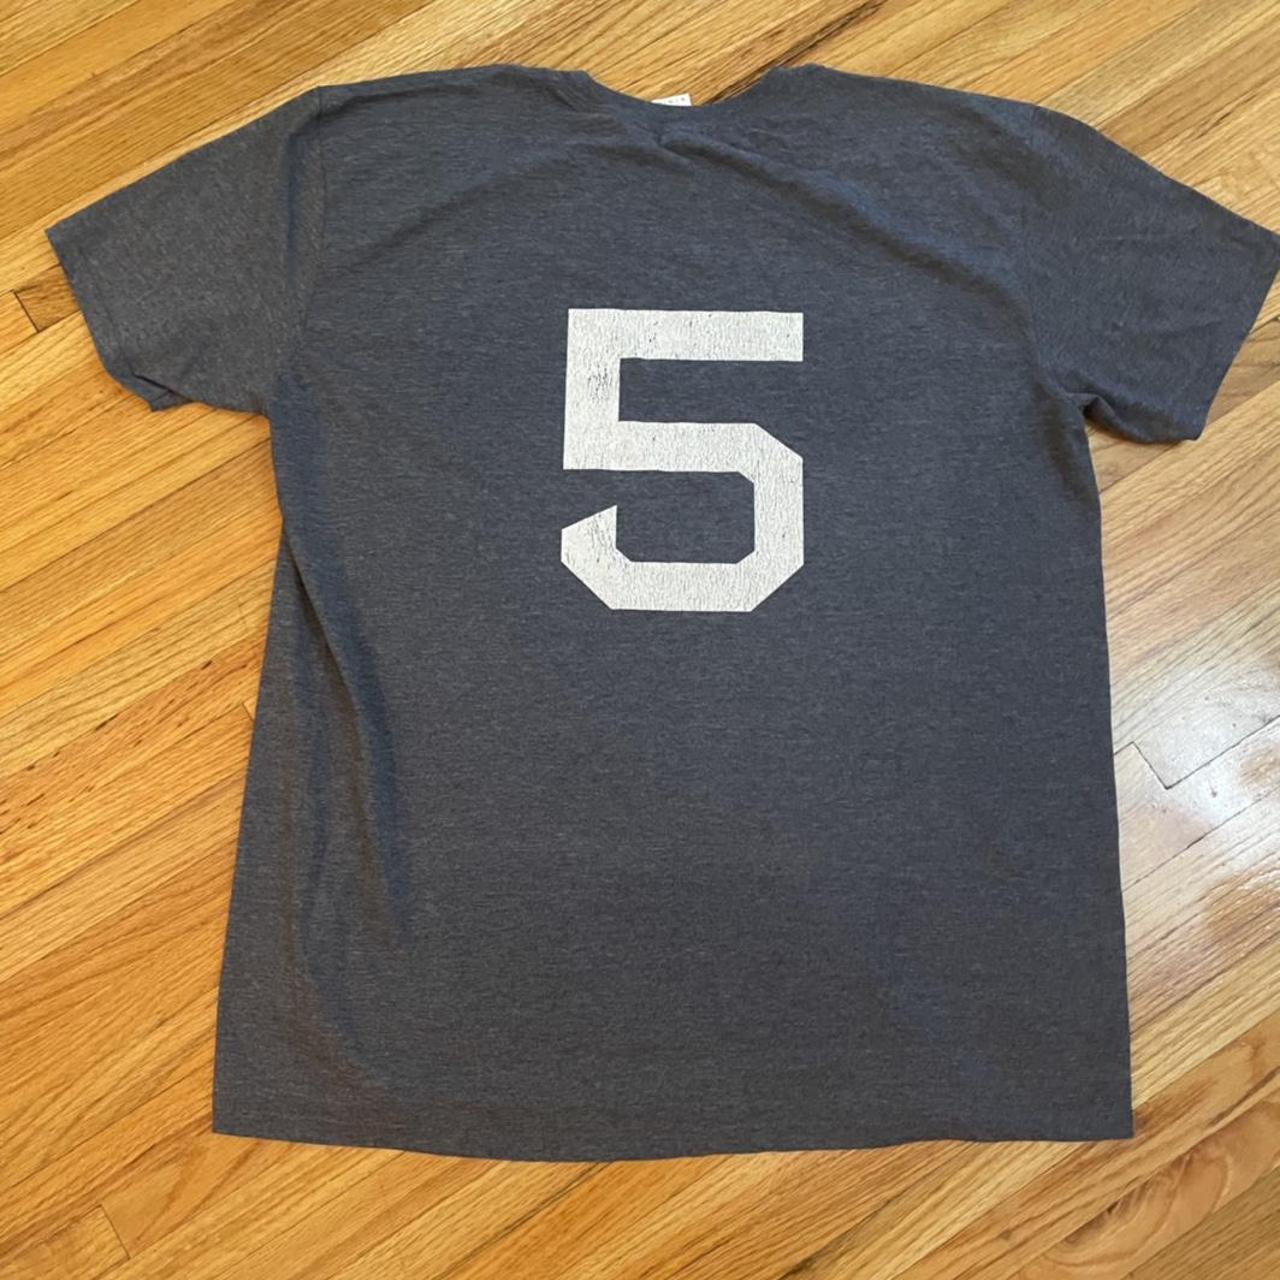 New York Yankees Joe DiMaggio Jersey T-Shirt - Depop